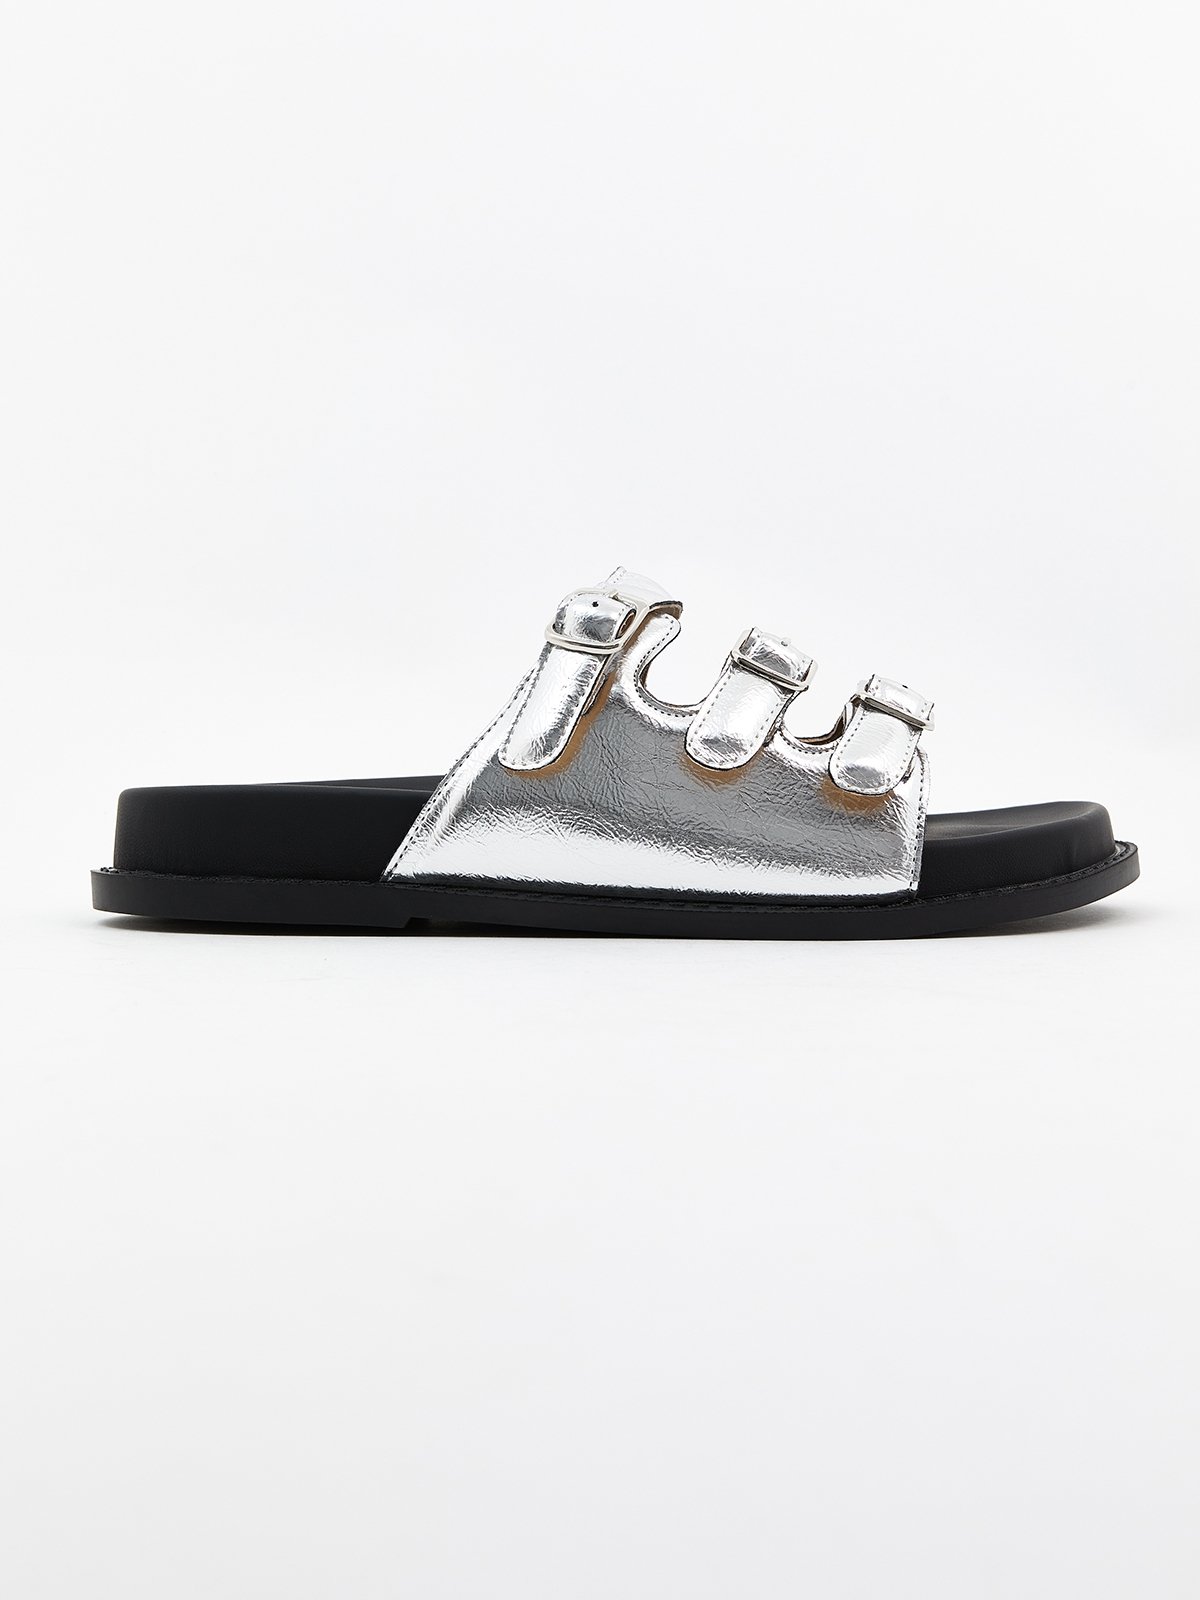 Remi Sandals - Metallic Black - Pomelo Fashion